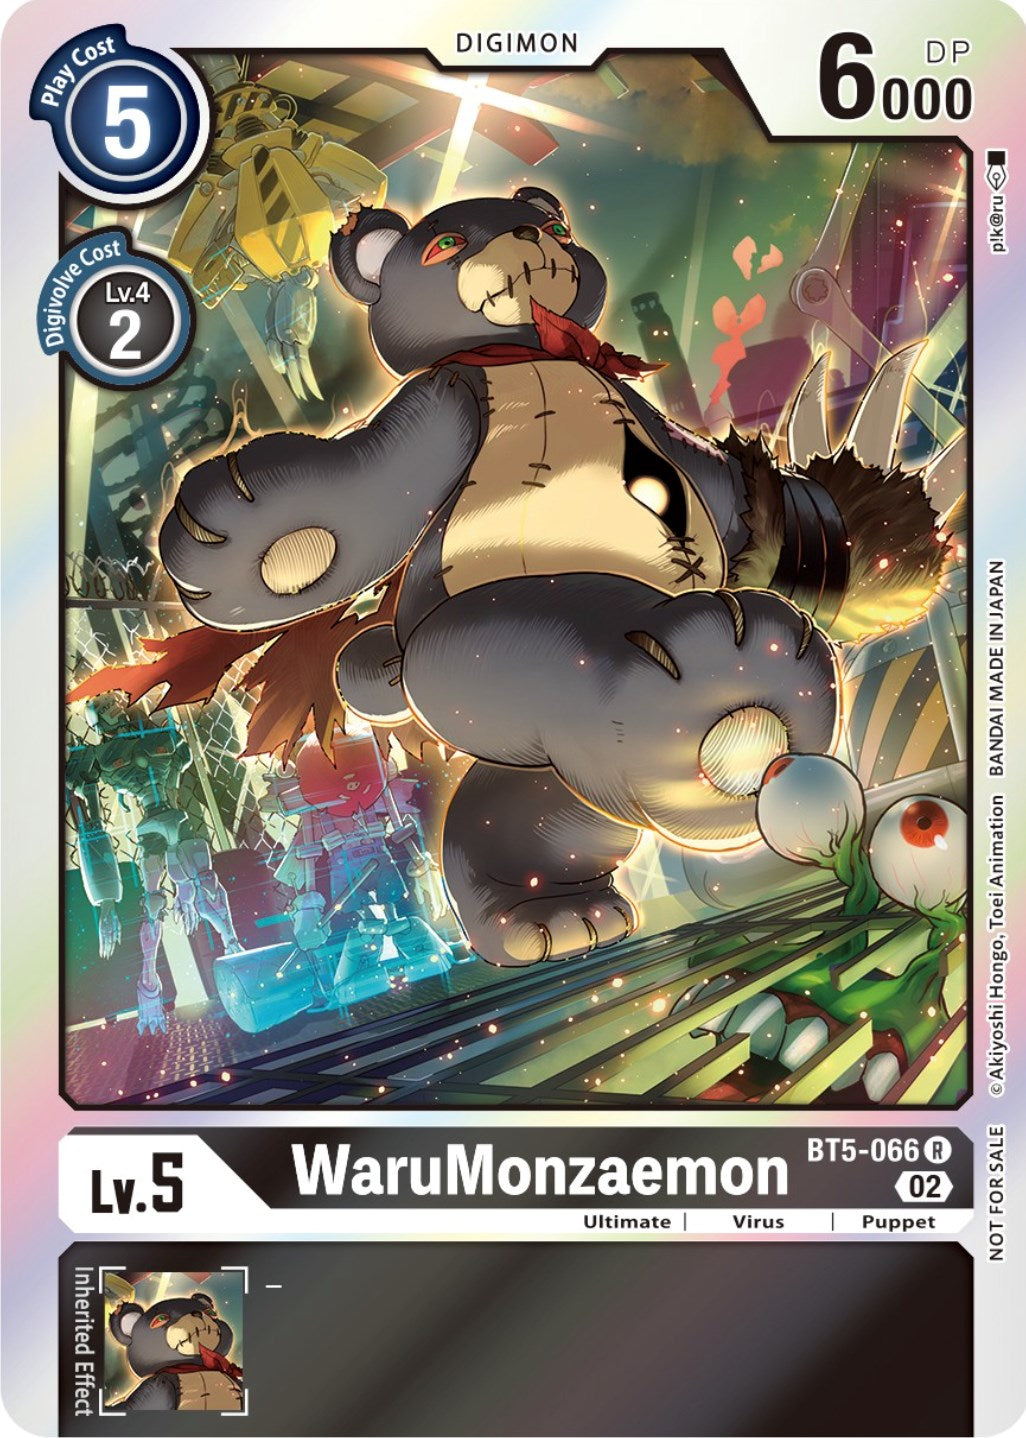 WaruMonzaemon [BT5-066] (Official Tournament Pack Vol. 7) [Battle of Omni Promos] | Black Swamp Games